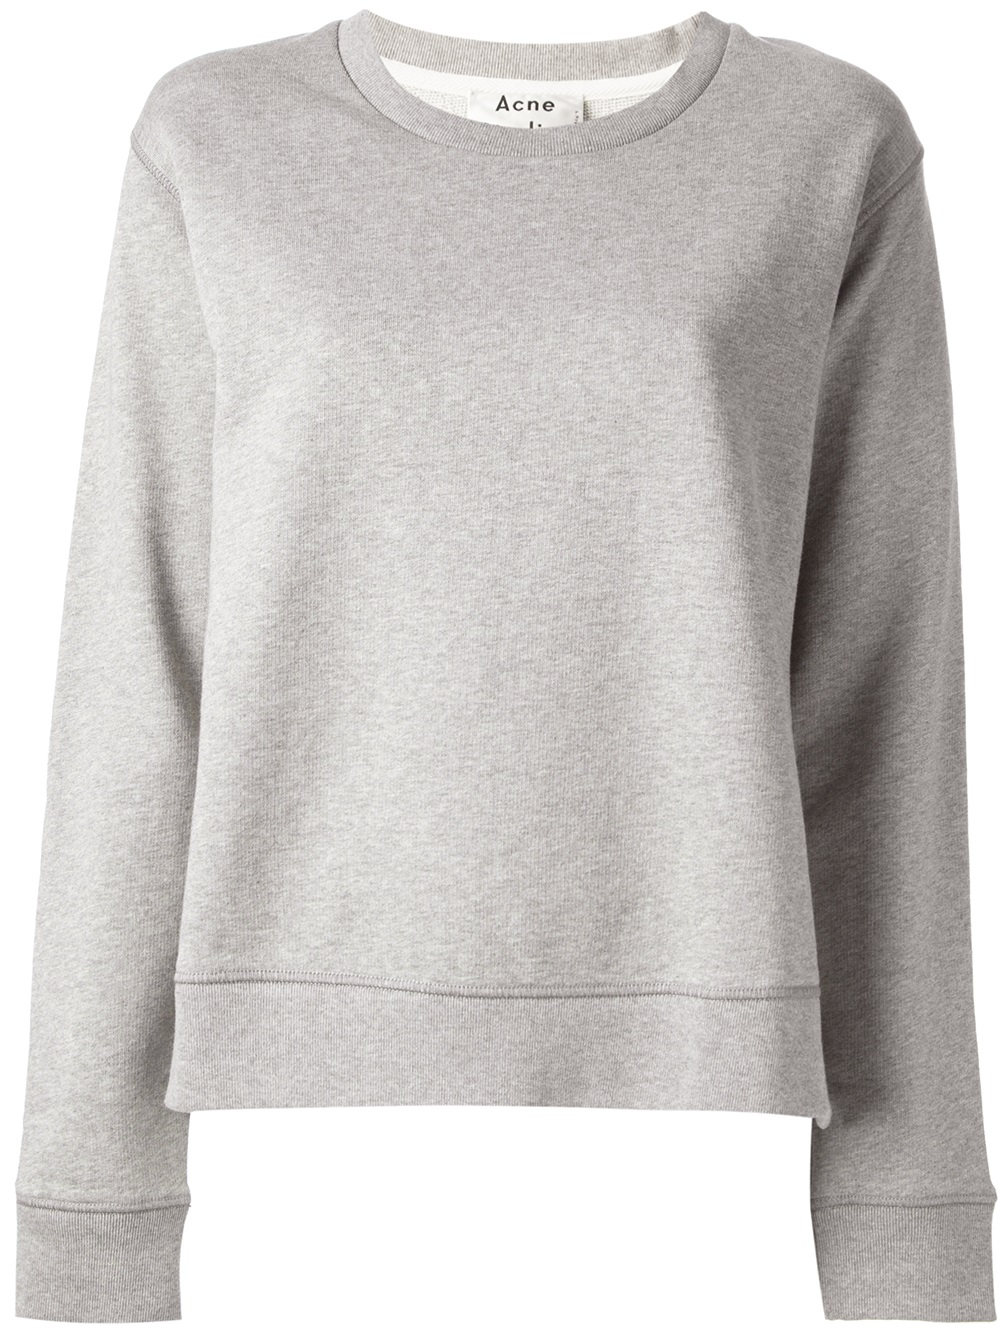 Lyst - Acne Studios Angle Sweatshirt in Gray